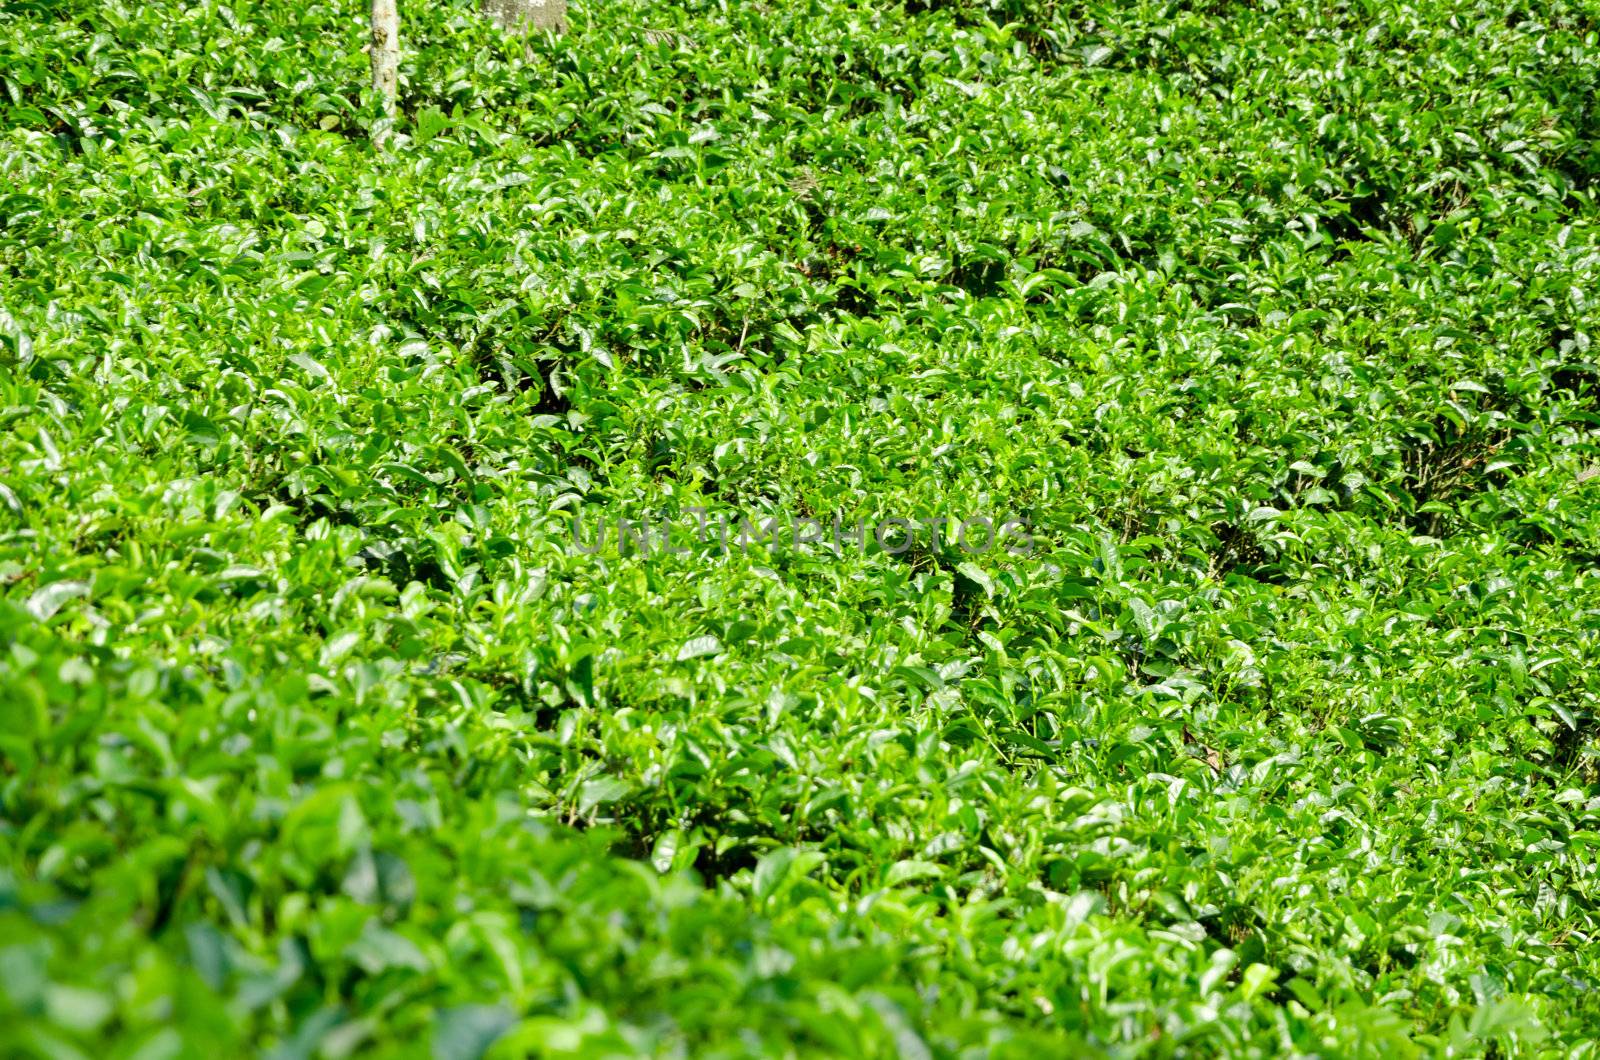  tea plantation emerald green  in the mountains of Sri Lanka by Sergieiev